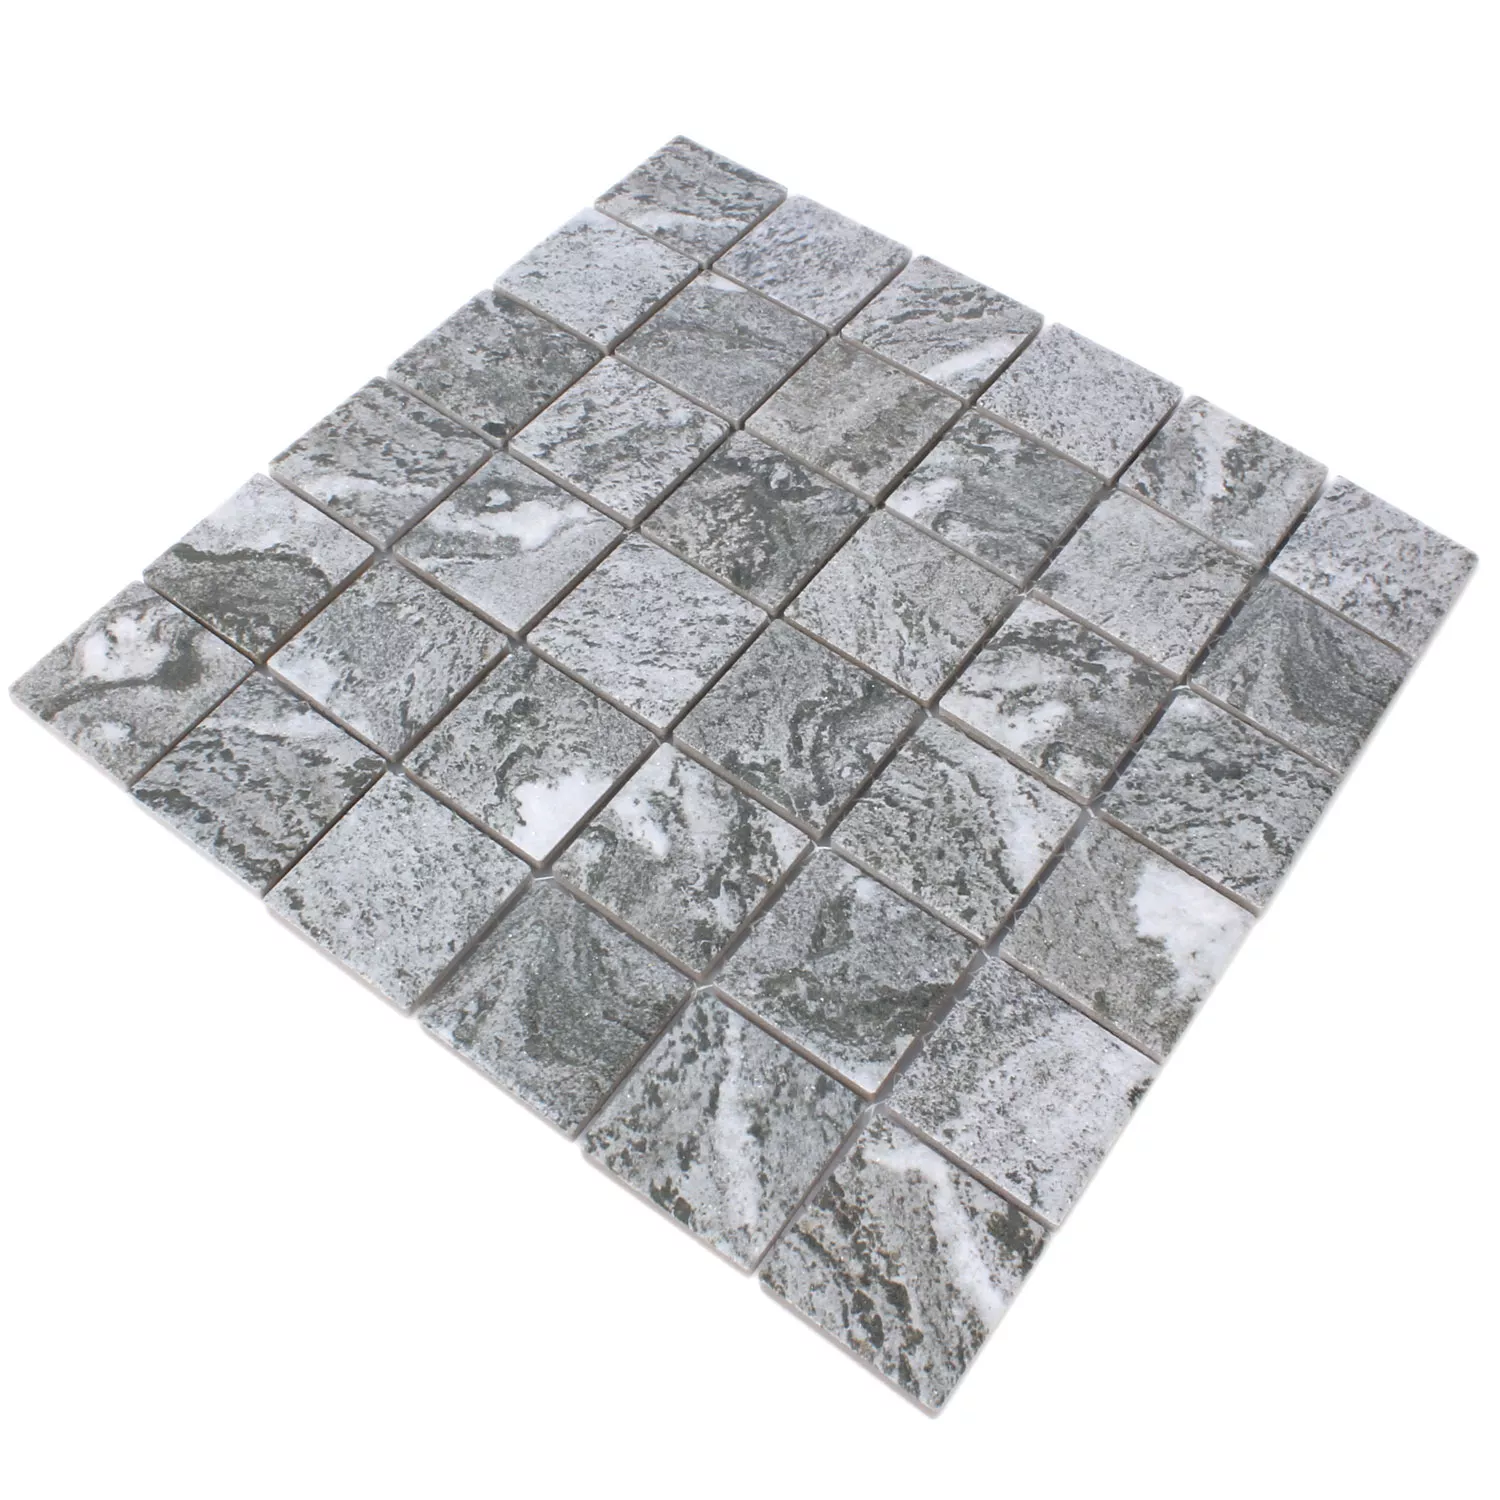 Sample Mosaic Tiles Ceramic Stone Optic Herkules Grey 